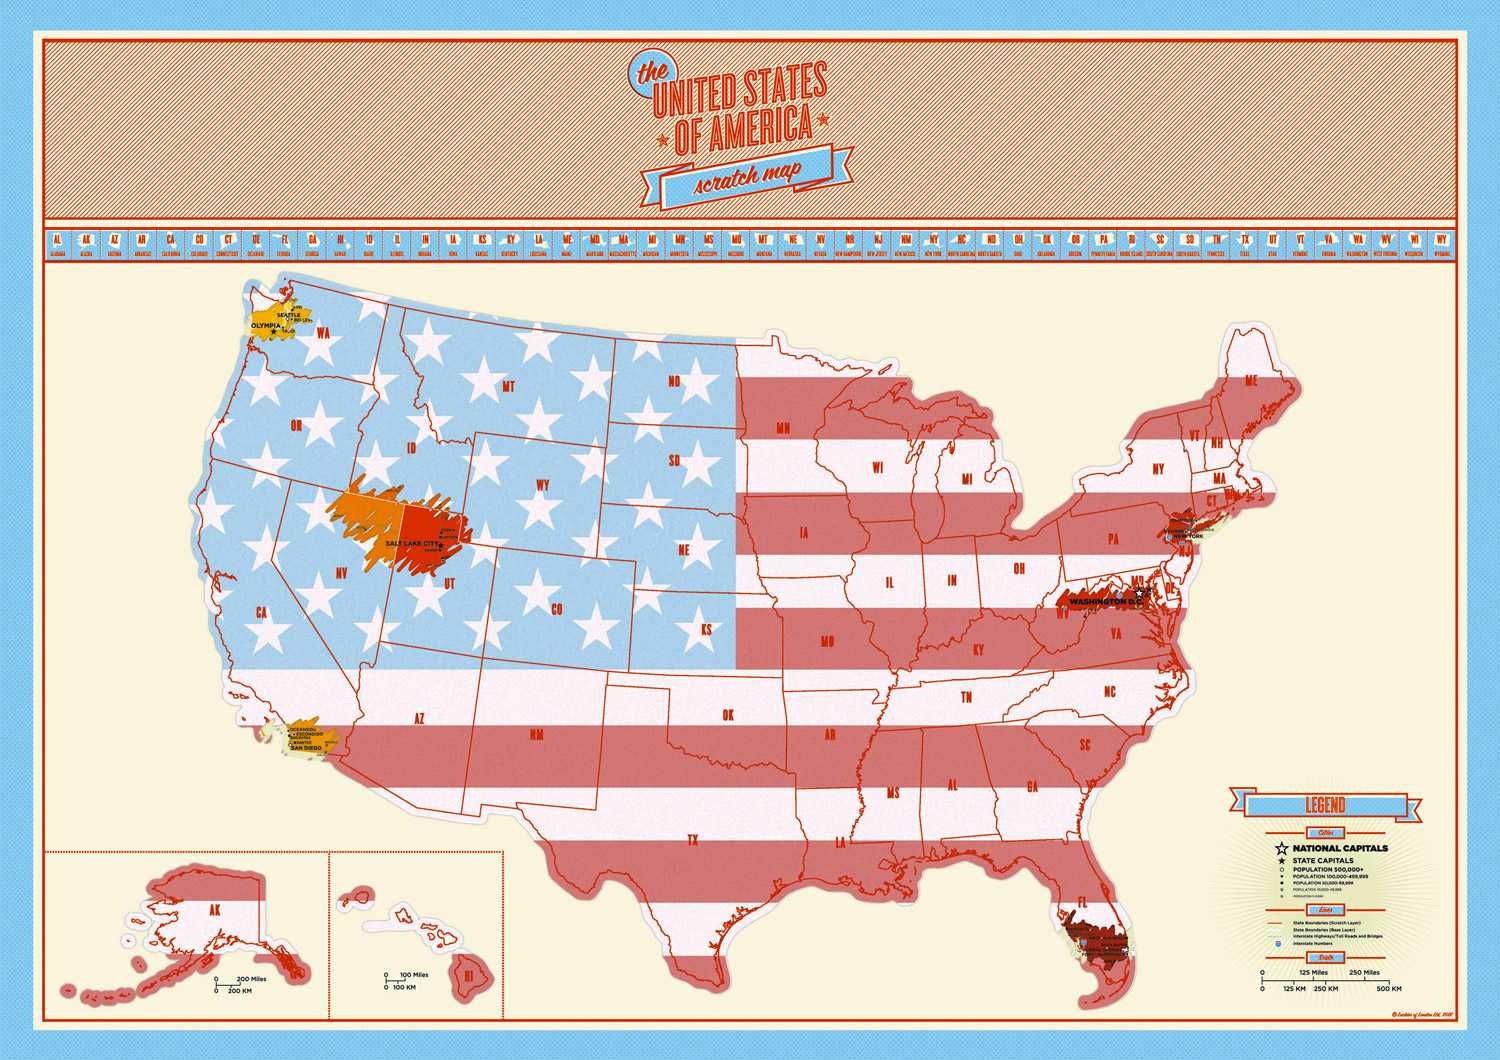 Harta SUA razuibila Am fost acolo - cadou pt pasionatii de calatorie